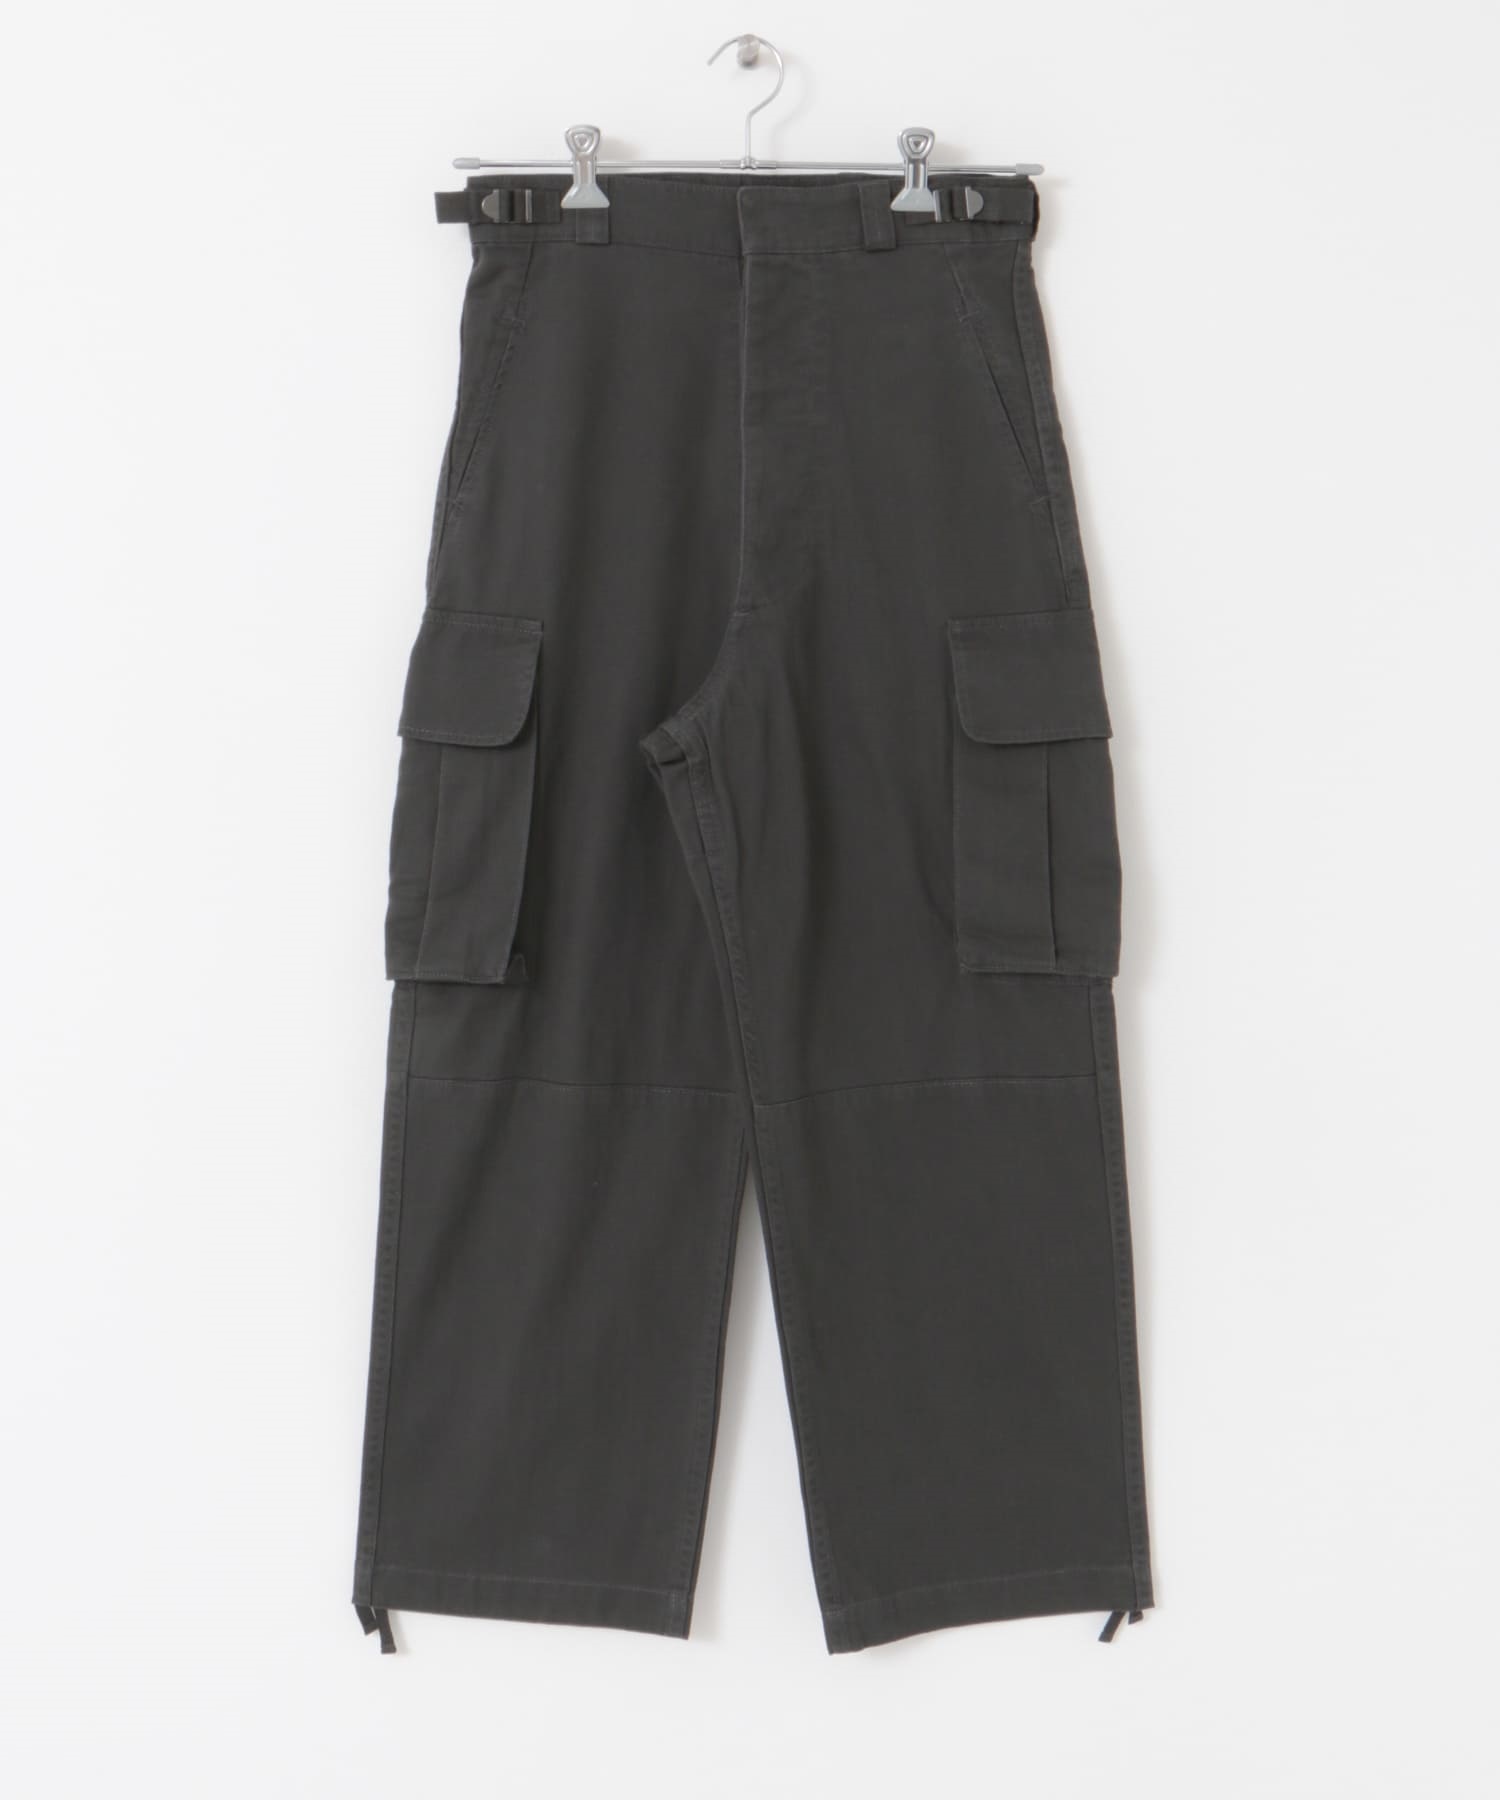 復古感工作褲(炭灰色-38-CHARCOAL GRAY)